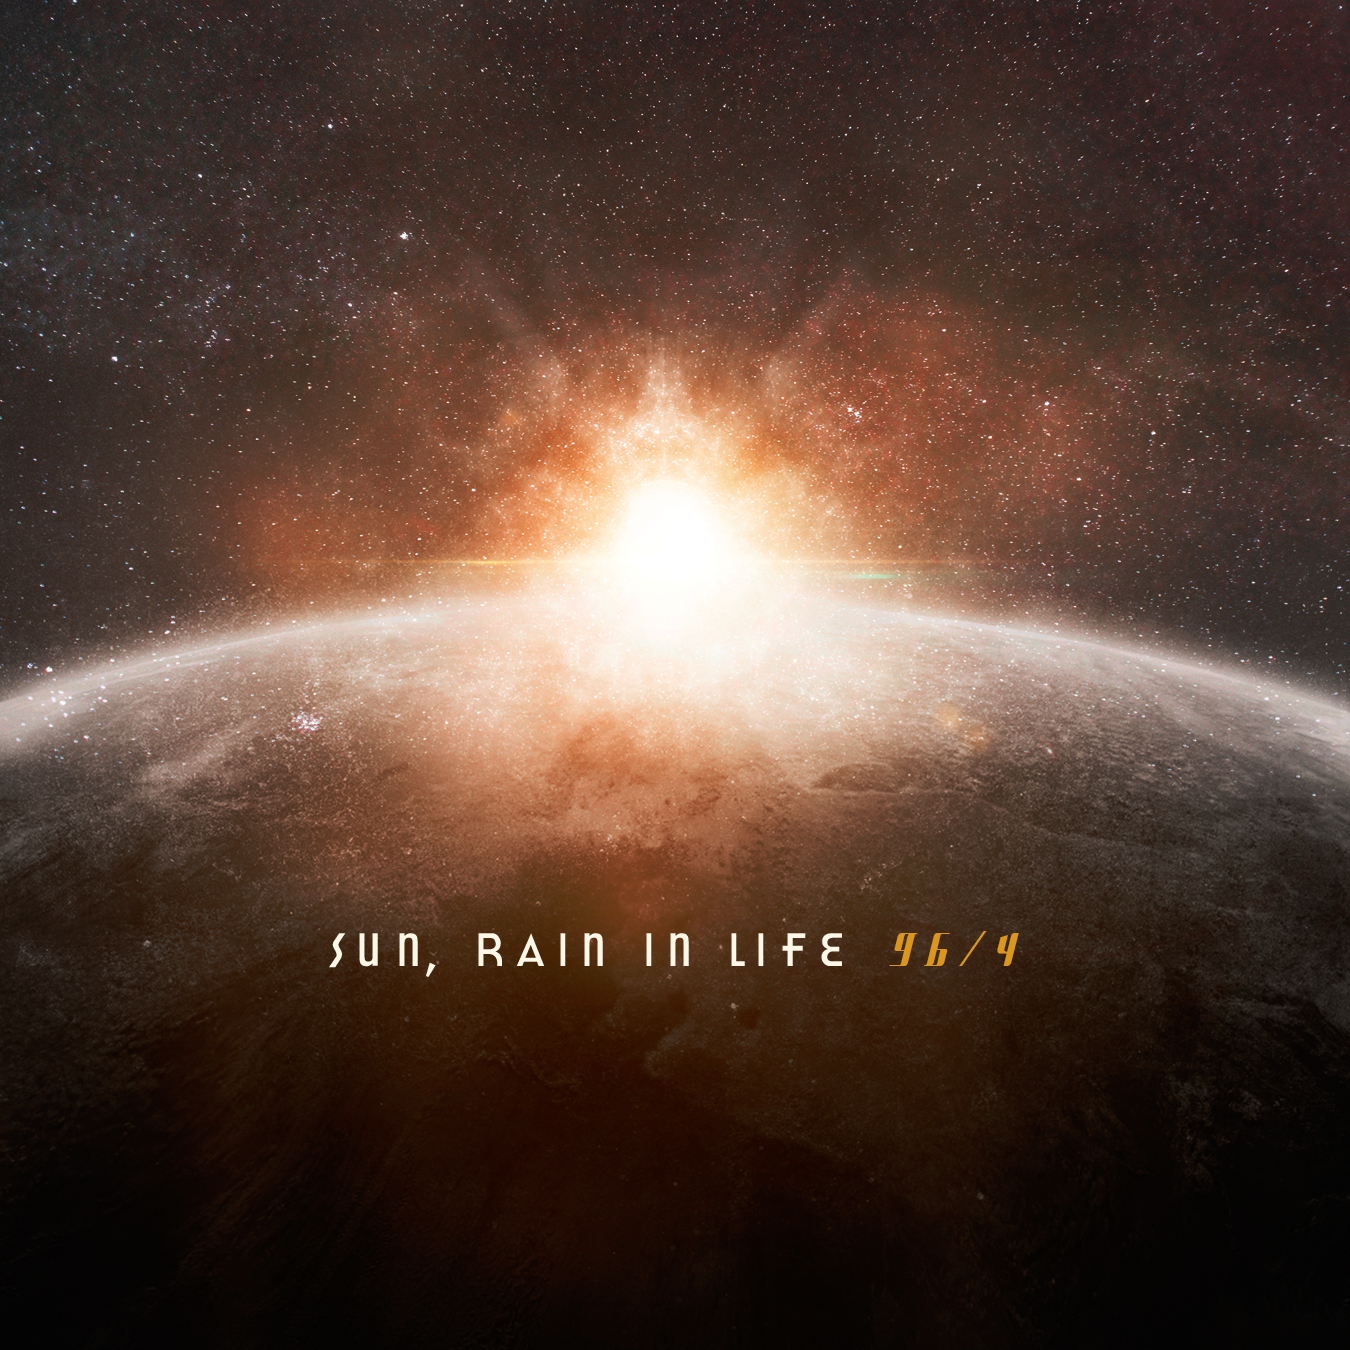 Sun, Rain in Life: Νέο lyric video από τους Αθηναίους grunge / alternative rockers